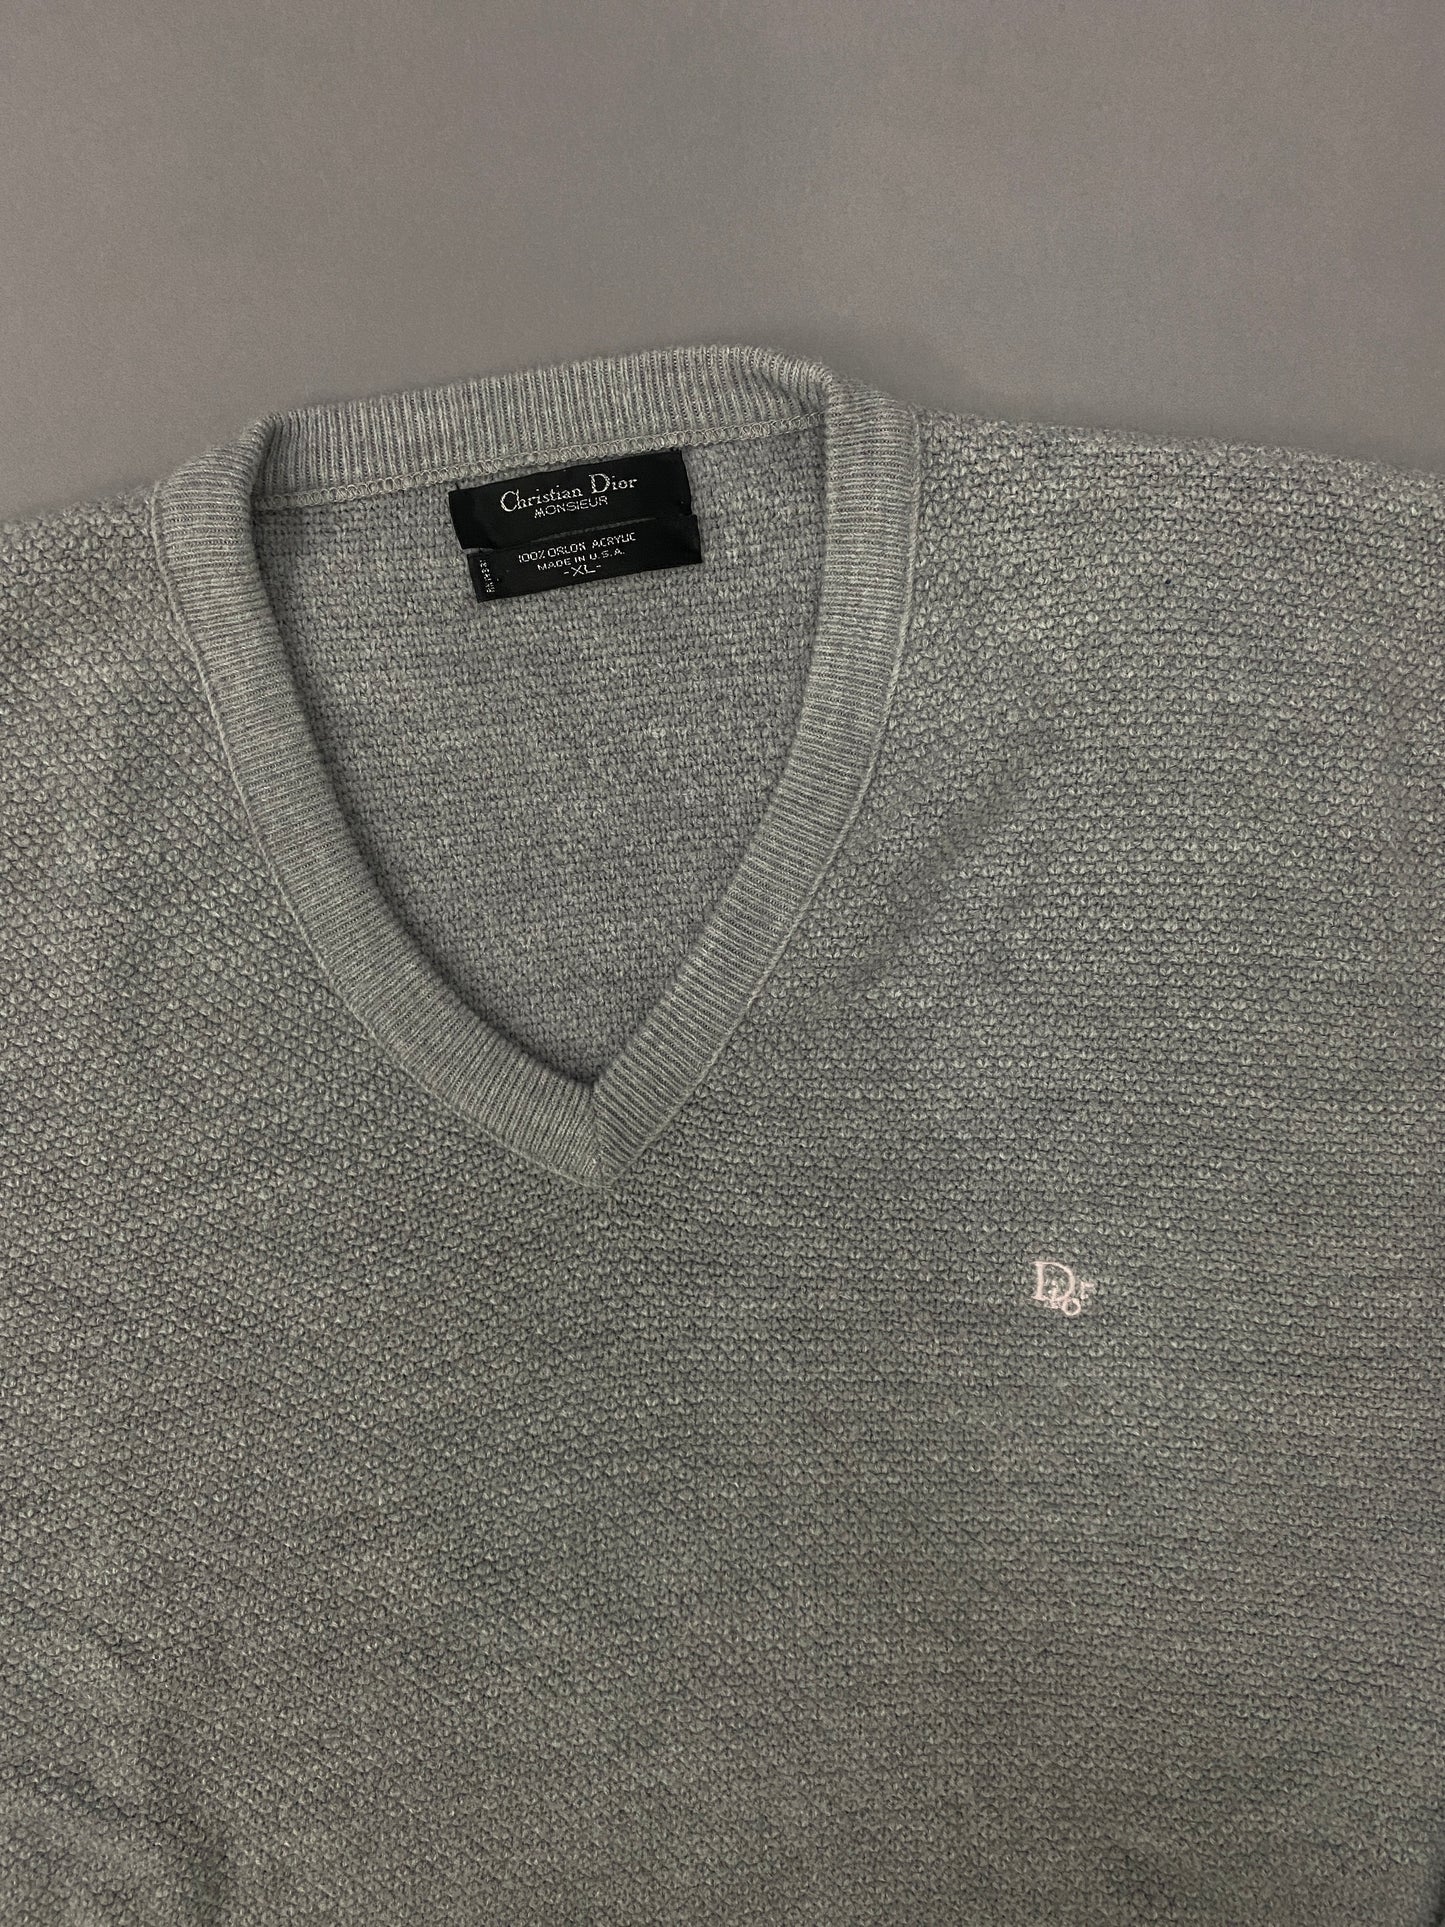 Vintage Dior Logo Sweater